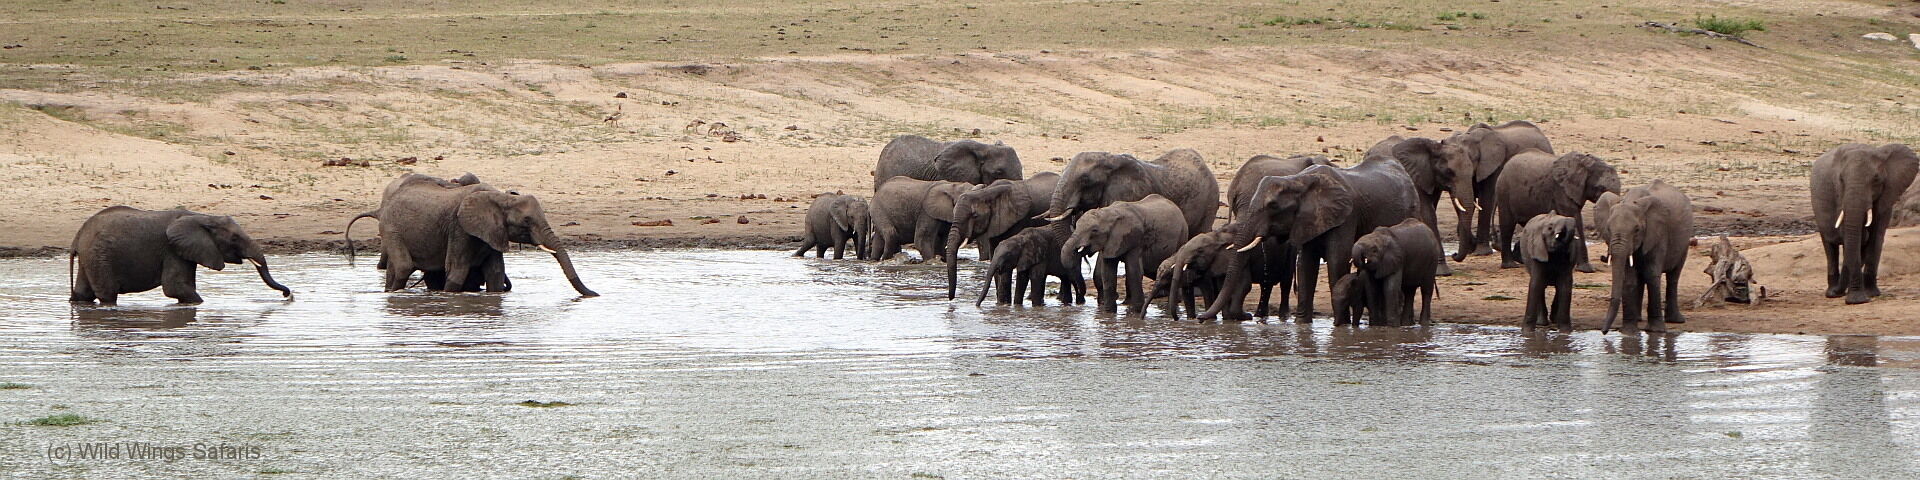 Aberdare National Park Elephants at Waterhole